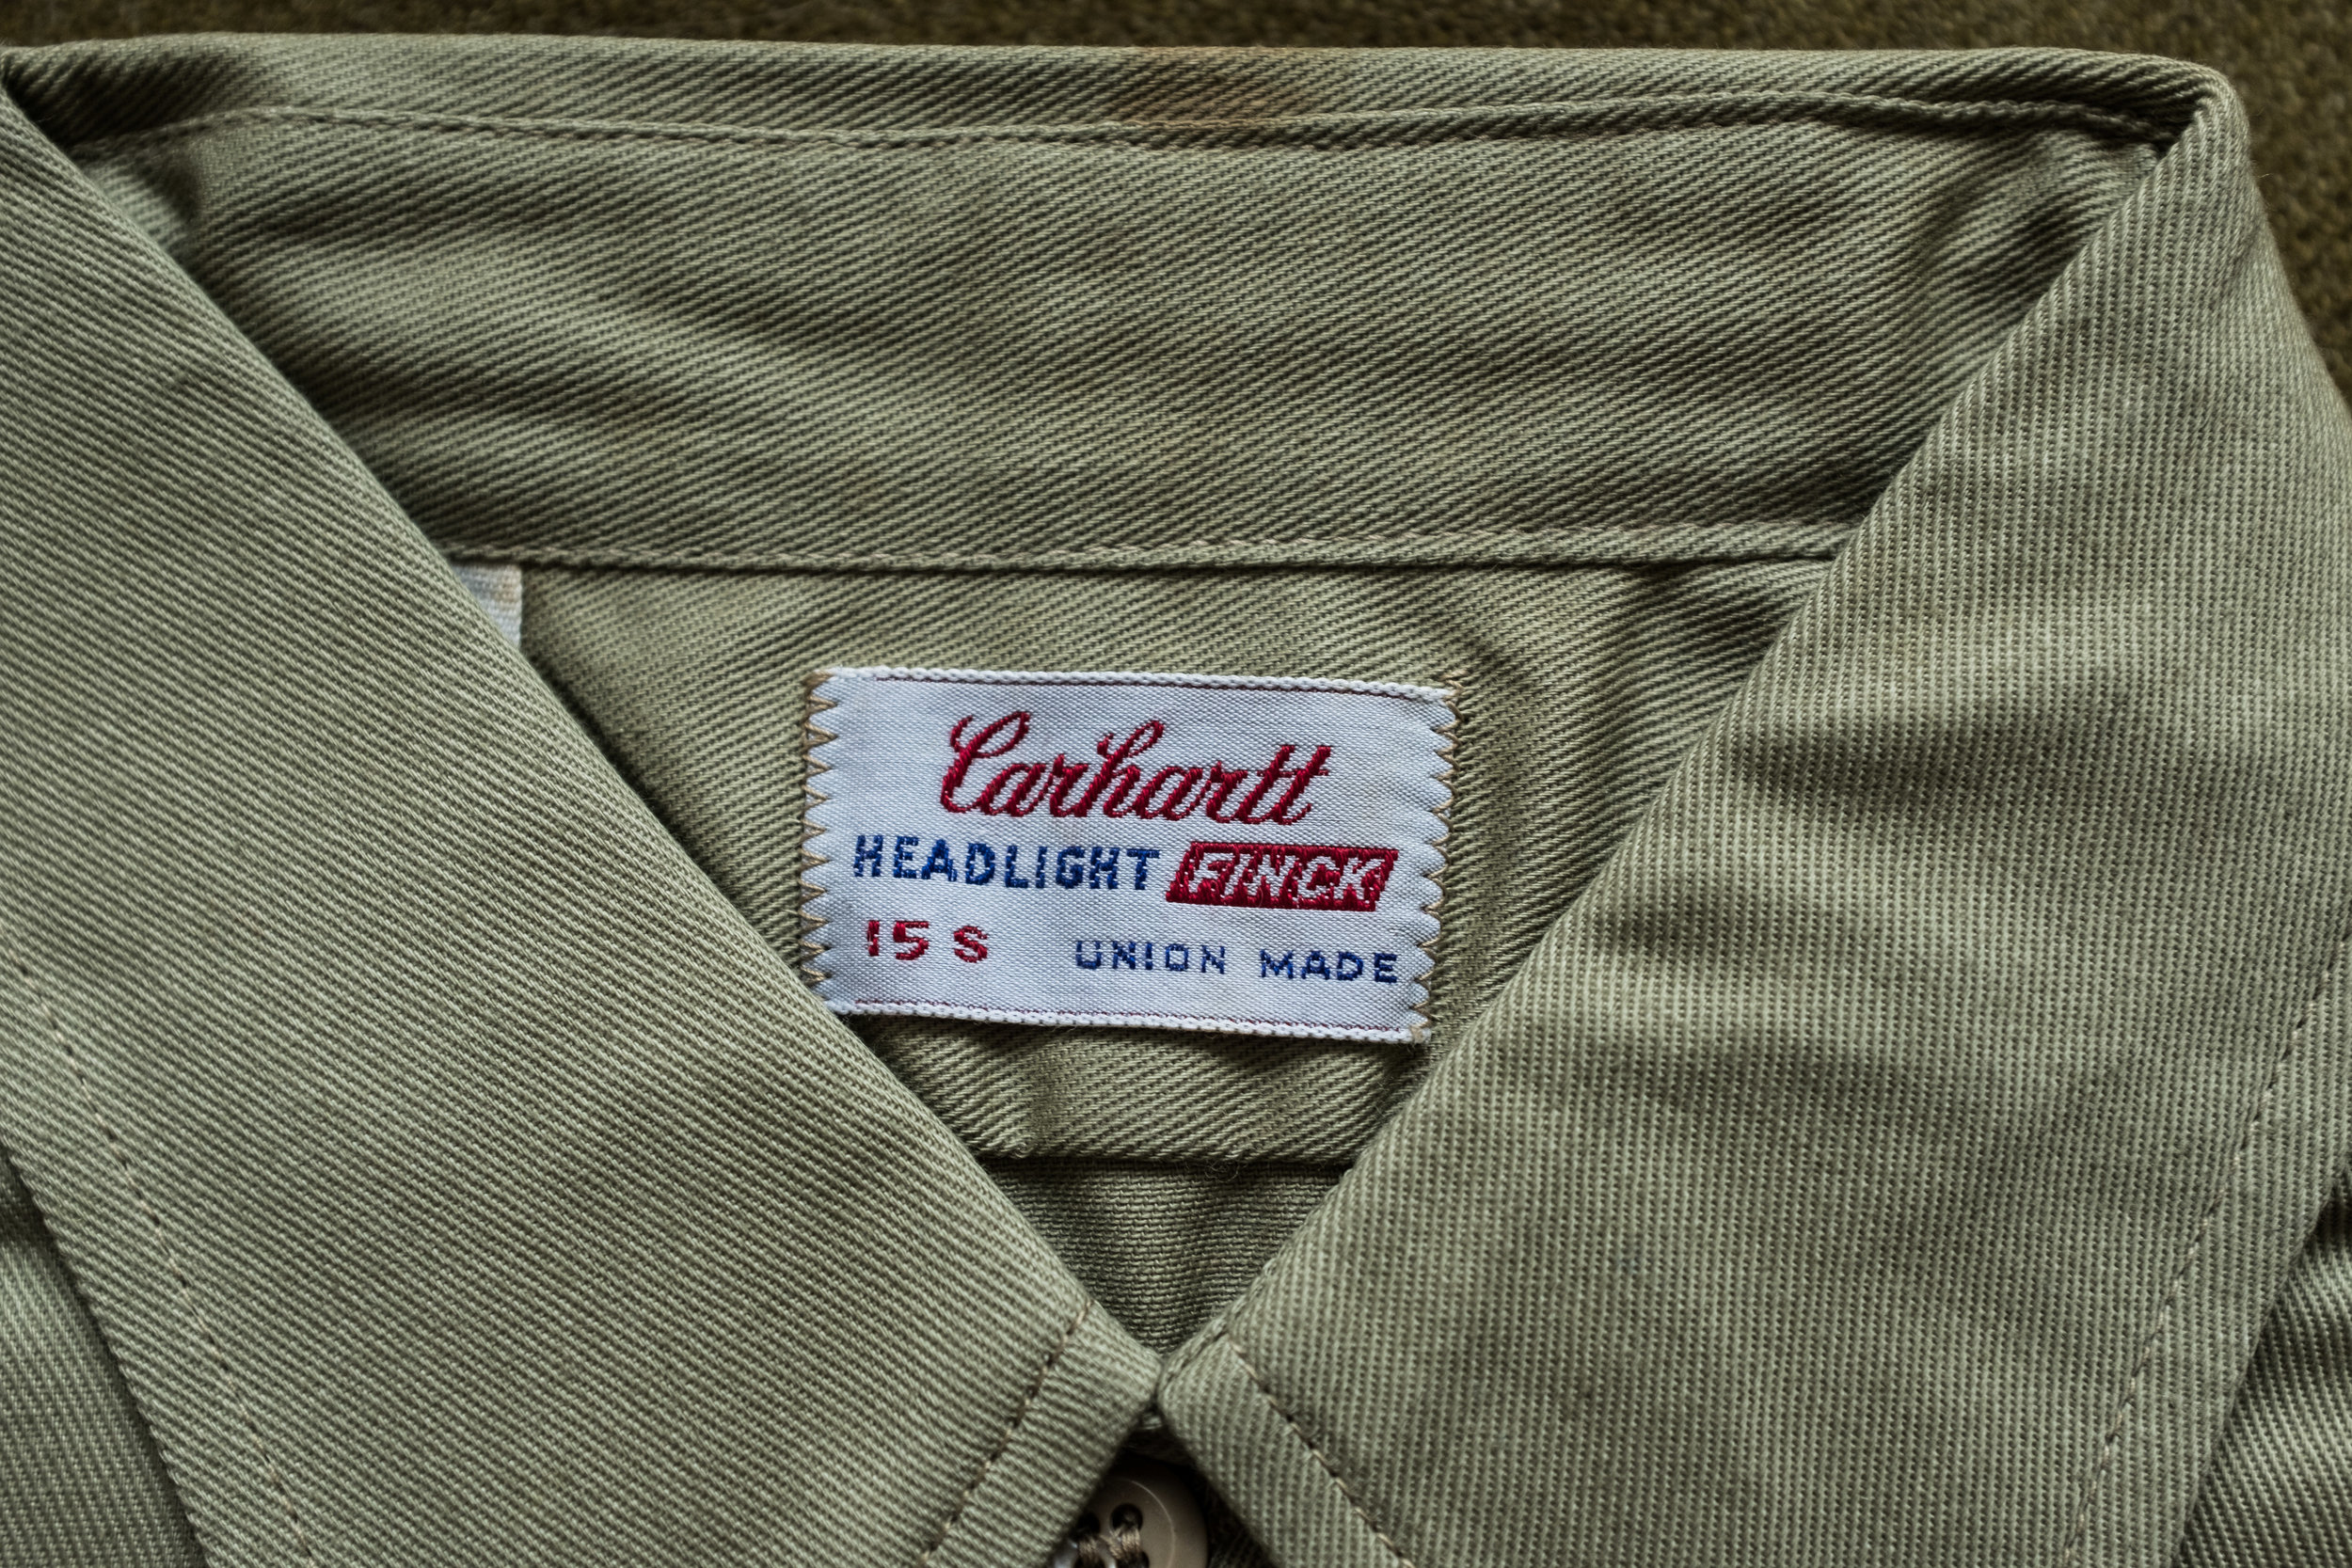 Rare Vintage Military and Workwear — Saunders Militaria